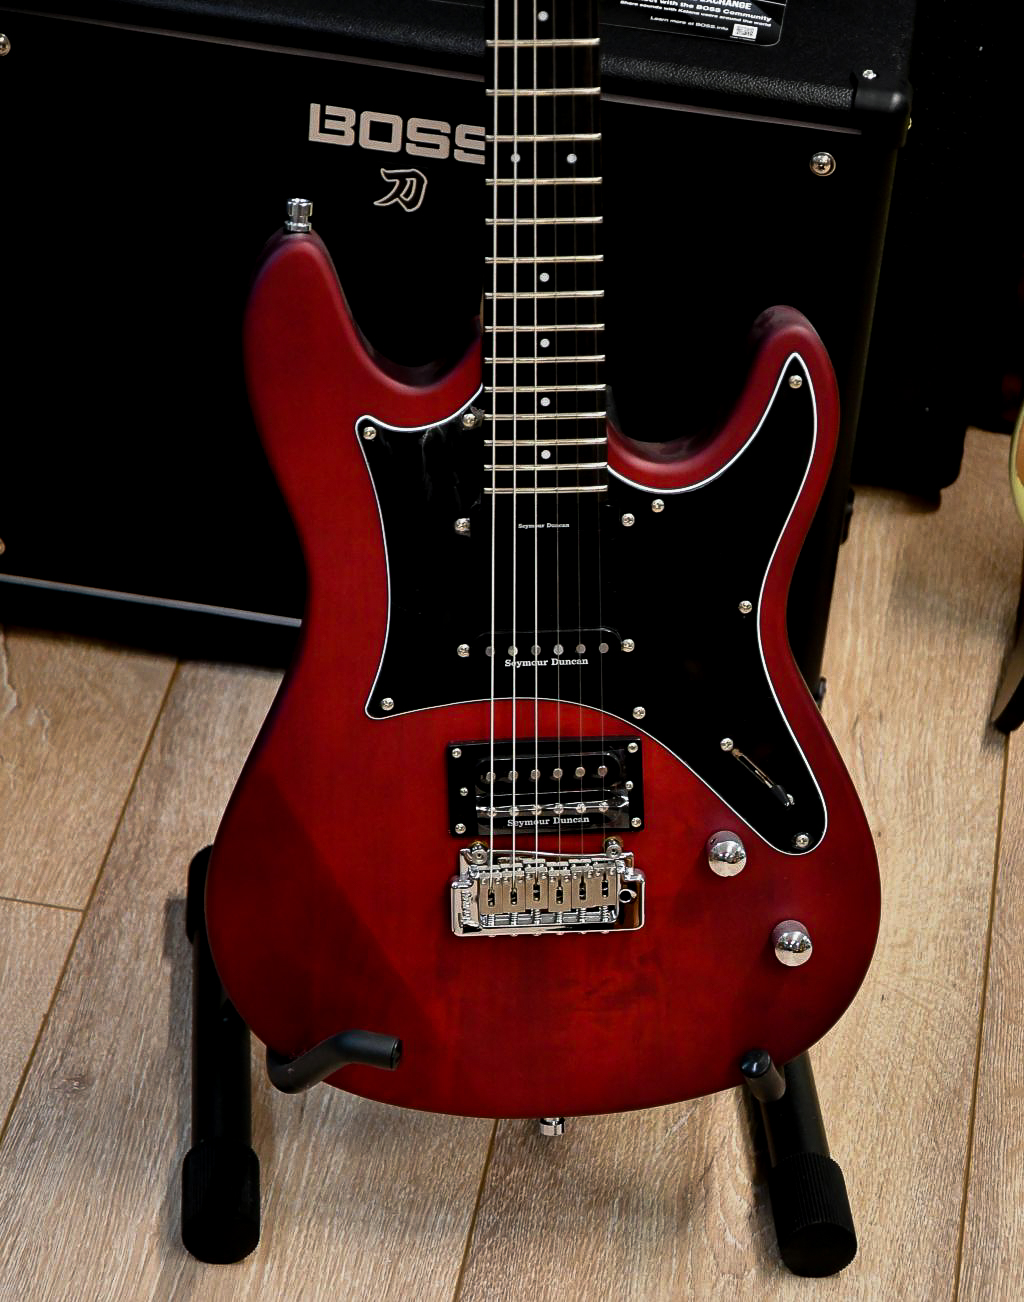 Framus E-Gitarre D-Series Diablo Pro - Burgundy Red Transparent Satin